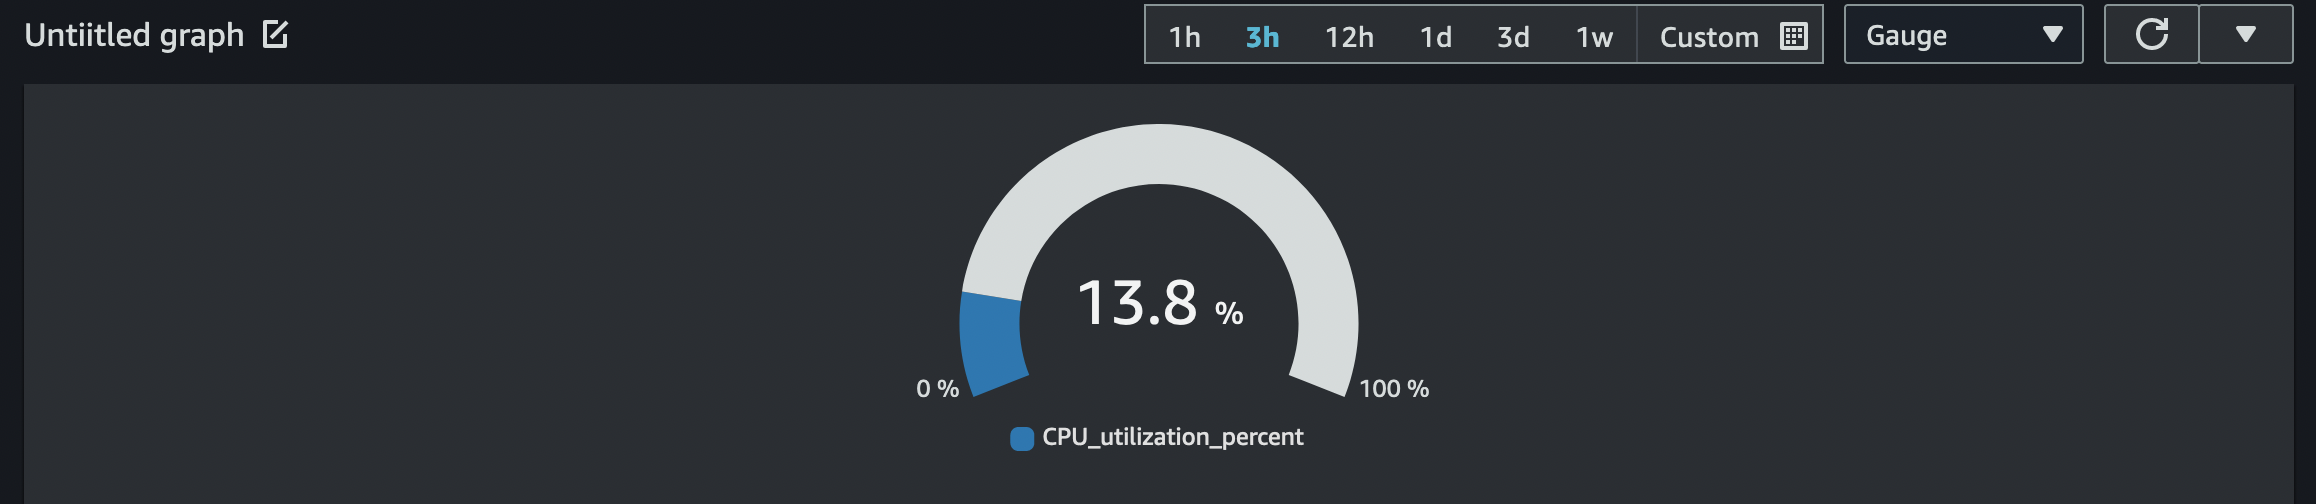 
                    A
                        screenshot of
                        the
                        gauge widget showing CPU
                        utilization.
                